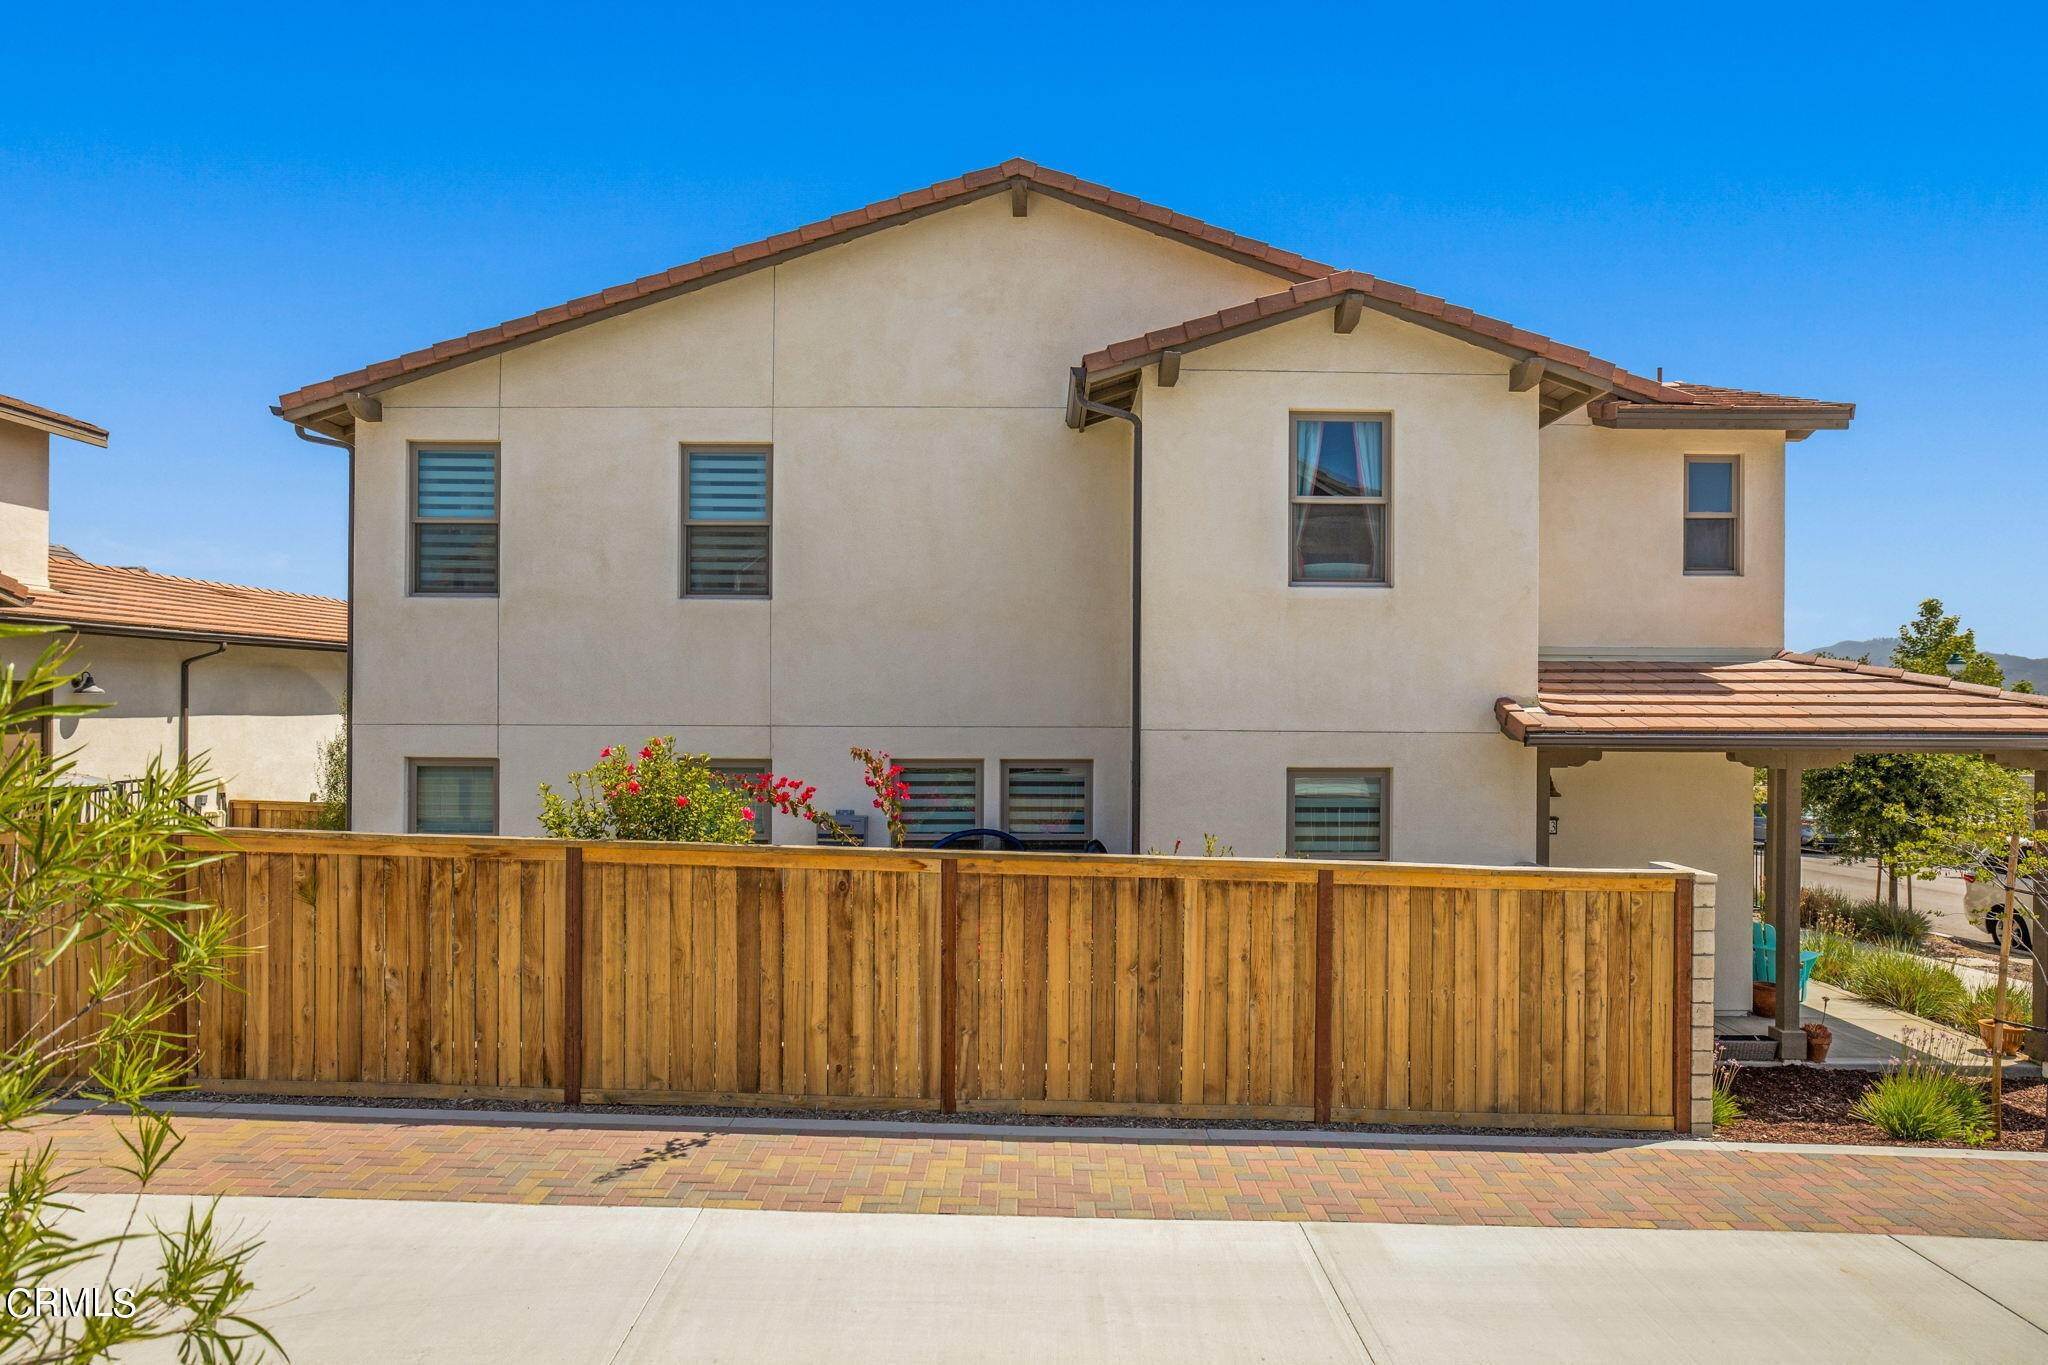 5. Condominiums for Sale at 10543 San Jose Street Ventura, California 93004 United States